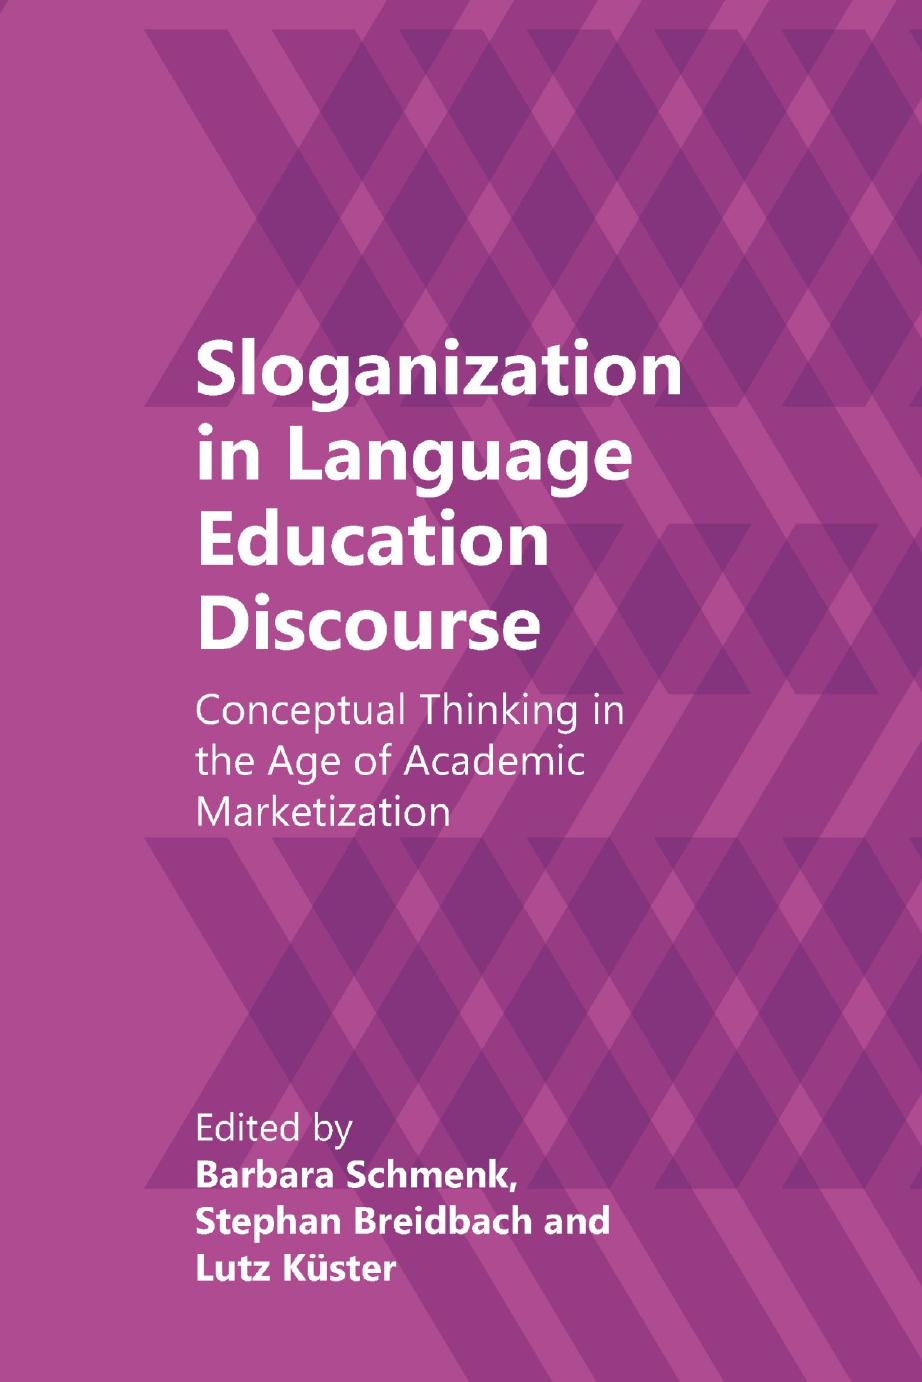 Sloganization in Language Education Discourse: Conceptual Thinking in the Age of Academic Marketization by Barbara Schmenk (editor) Stephan Breidbach (editor) Lutz Küster (editor)